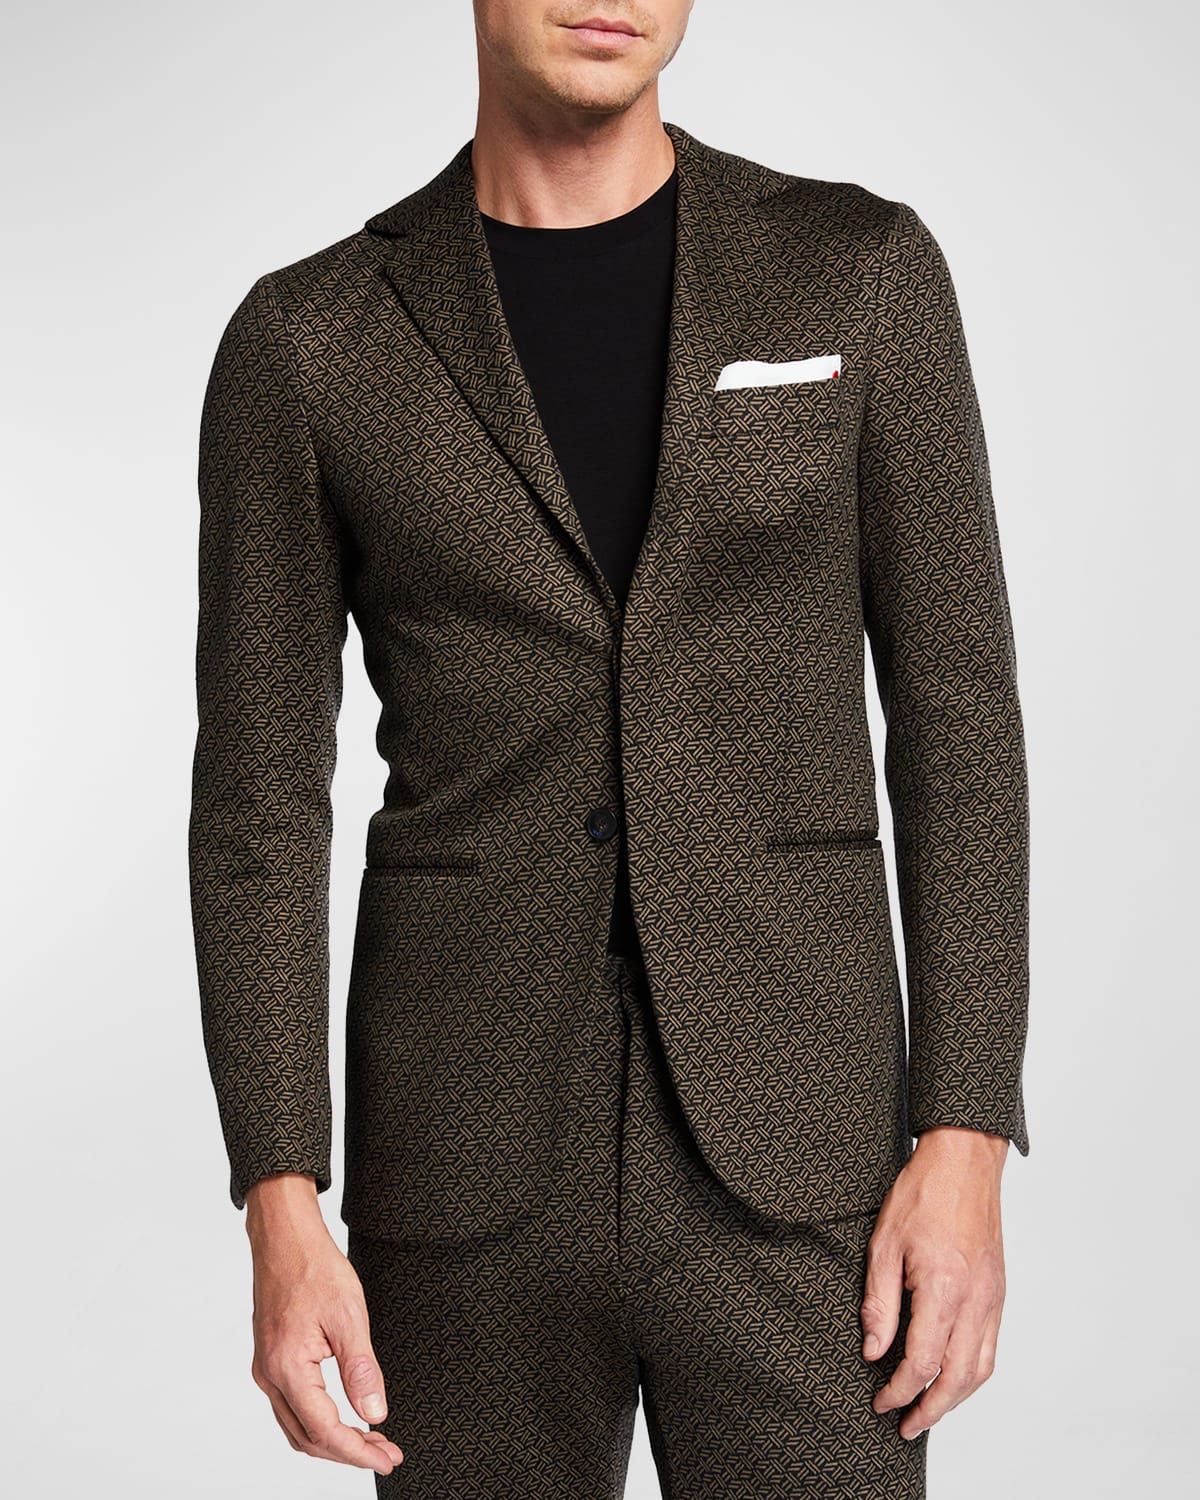 KNT Men's Geometric Wool-Blend Sport Jacket